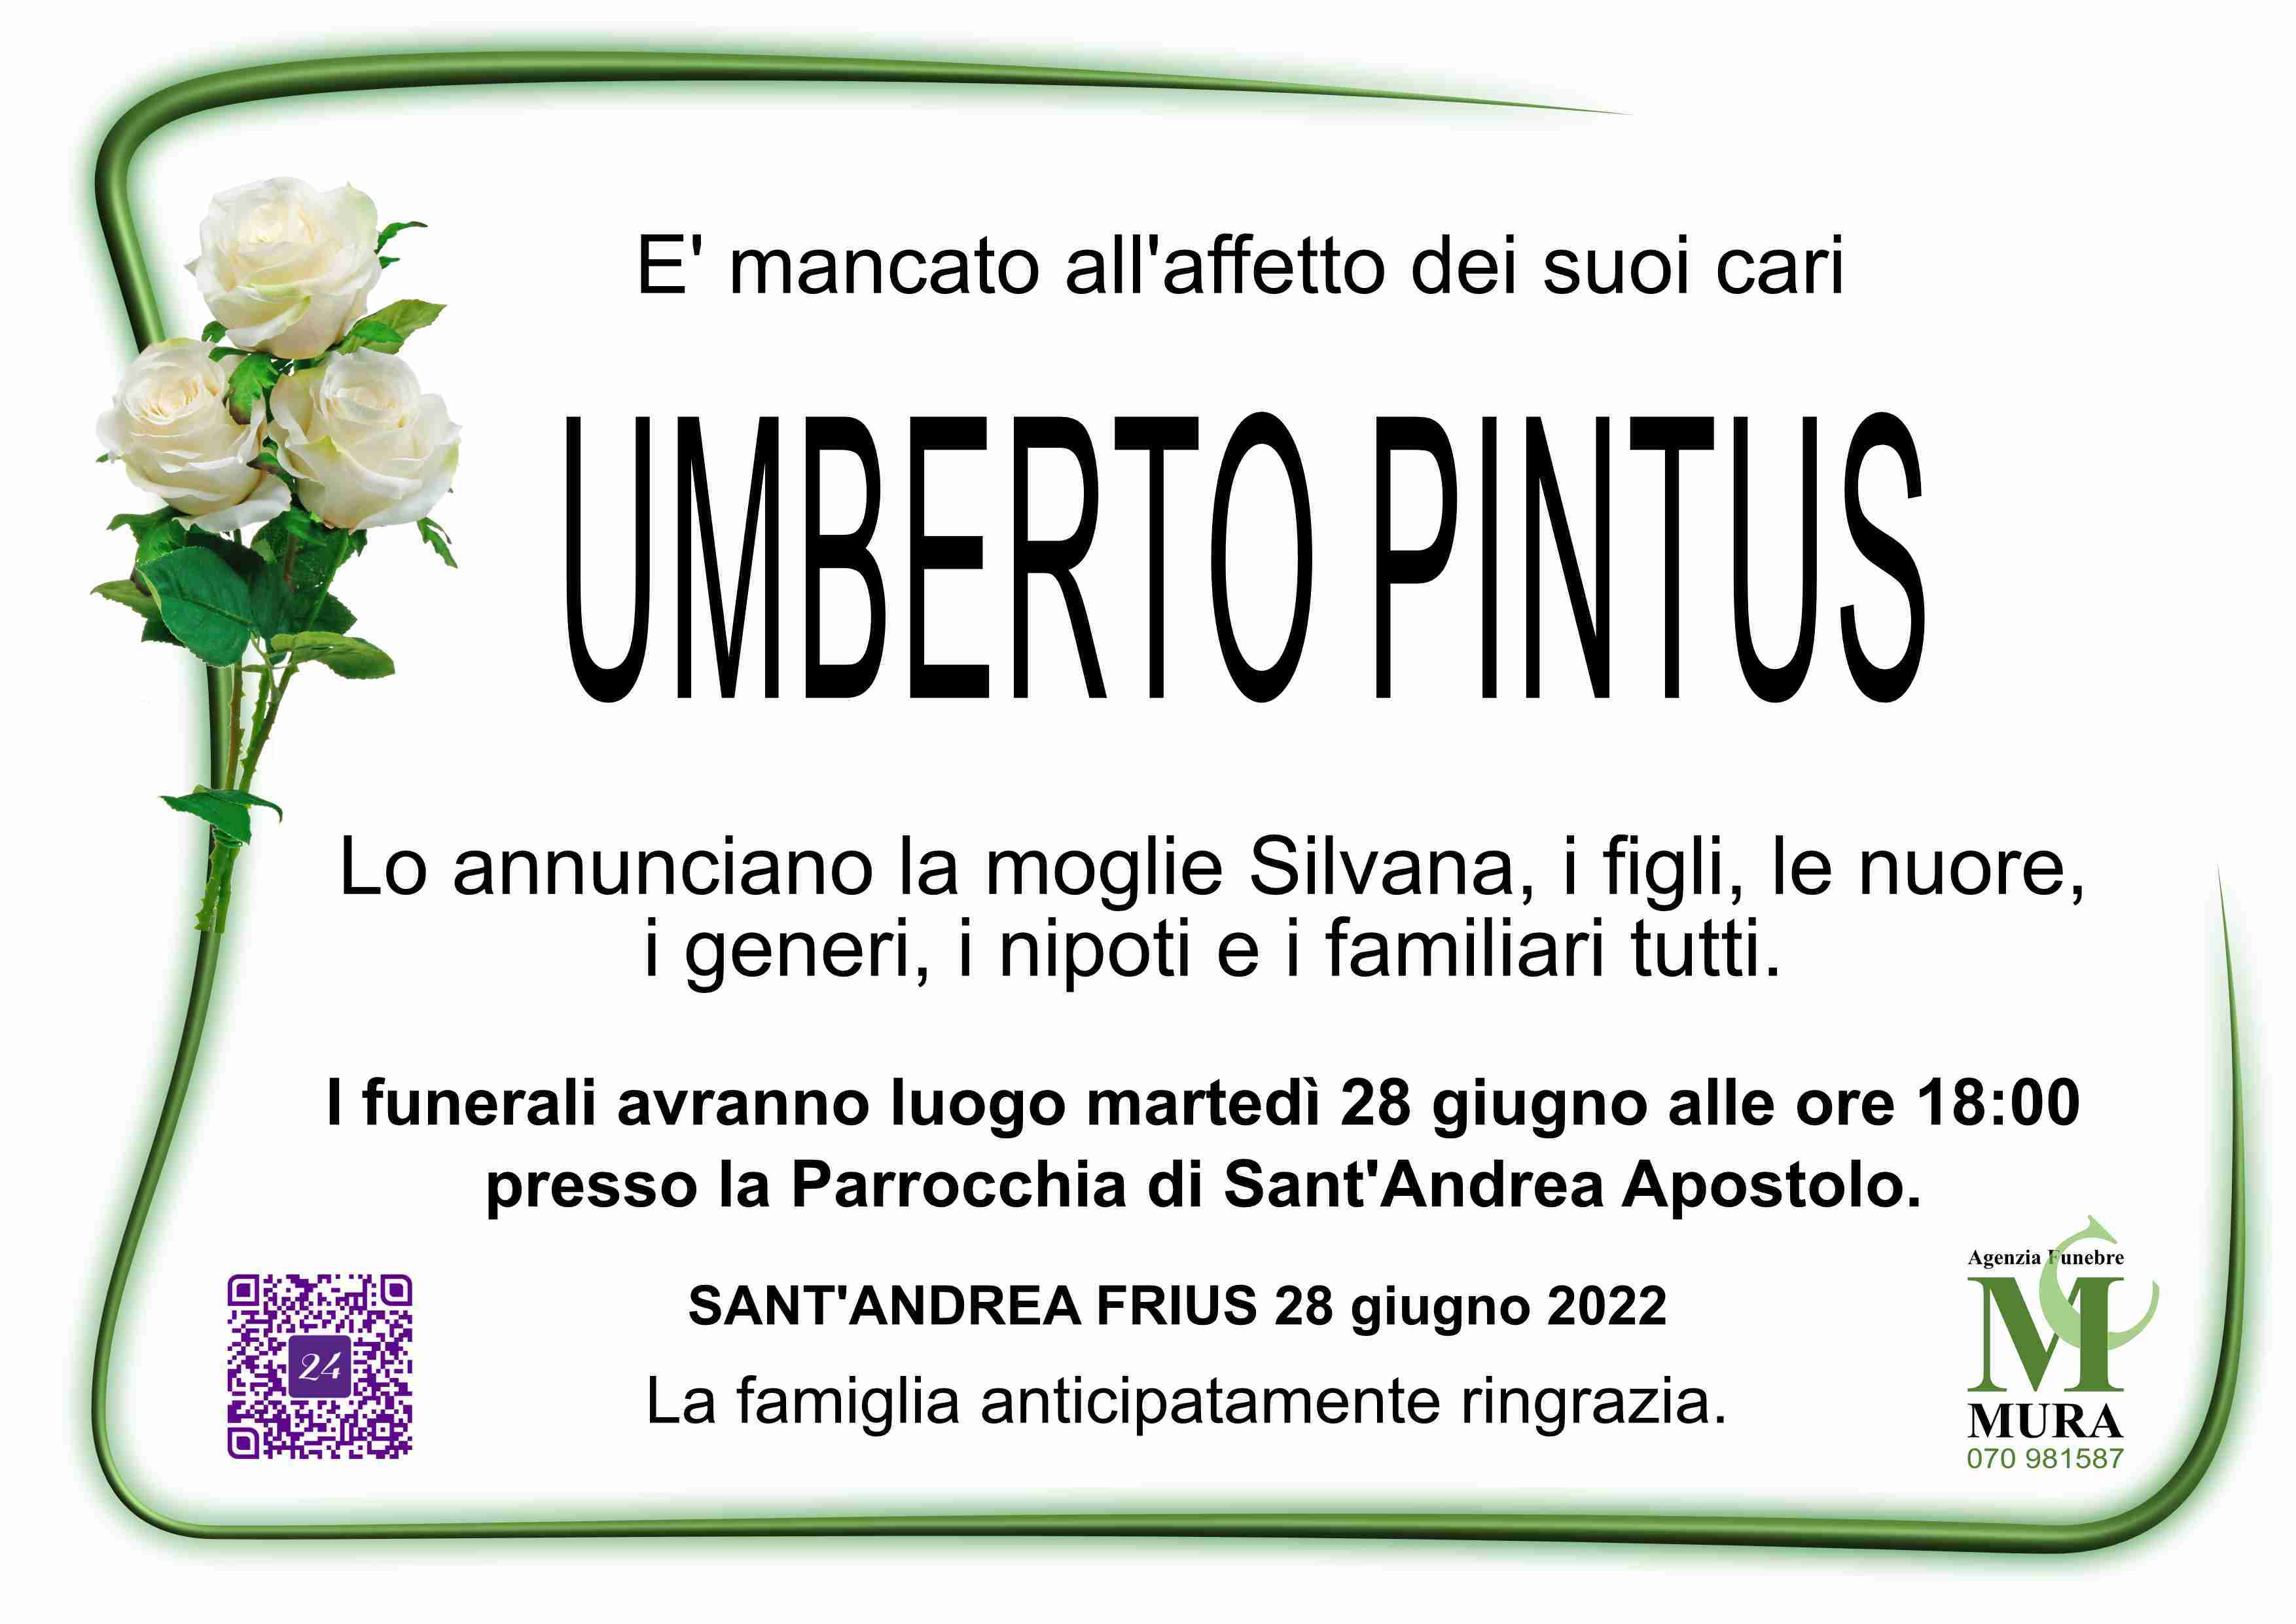 Umberto Pintus